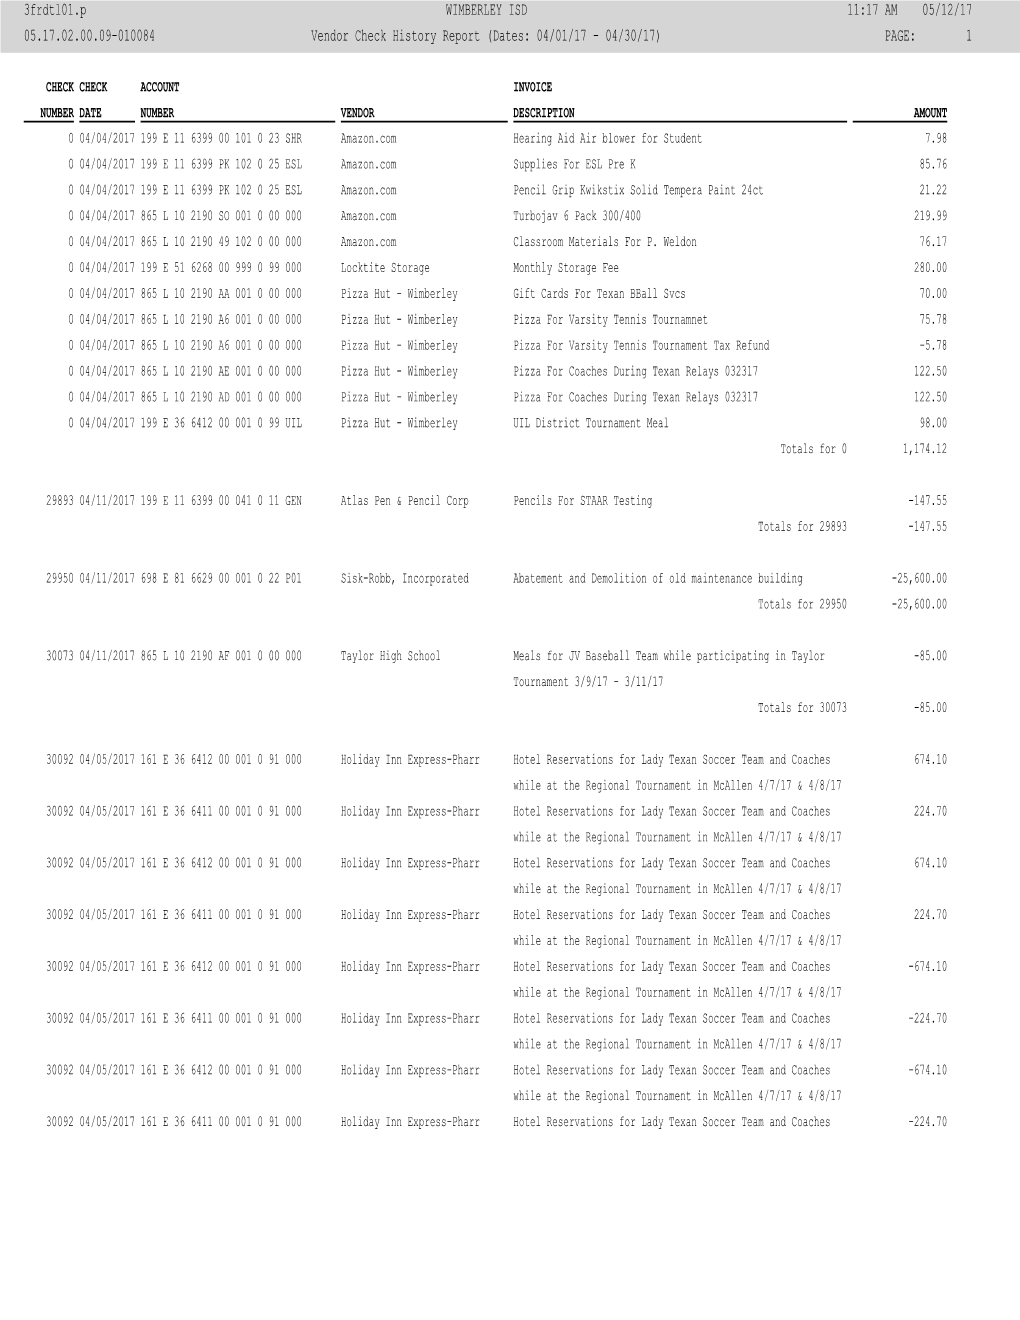 Vendor Check History Report (Dates: 04/01/17 - 04/30/17) PAGE: 1